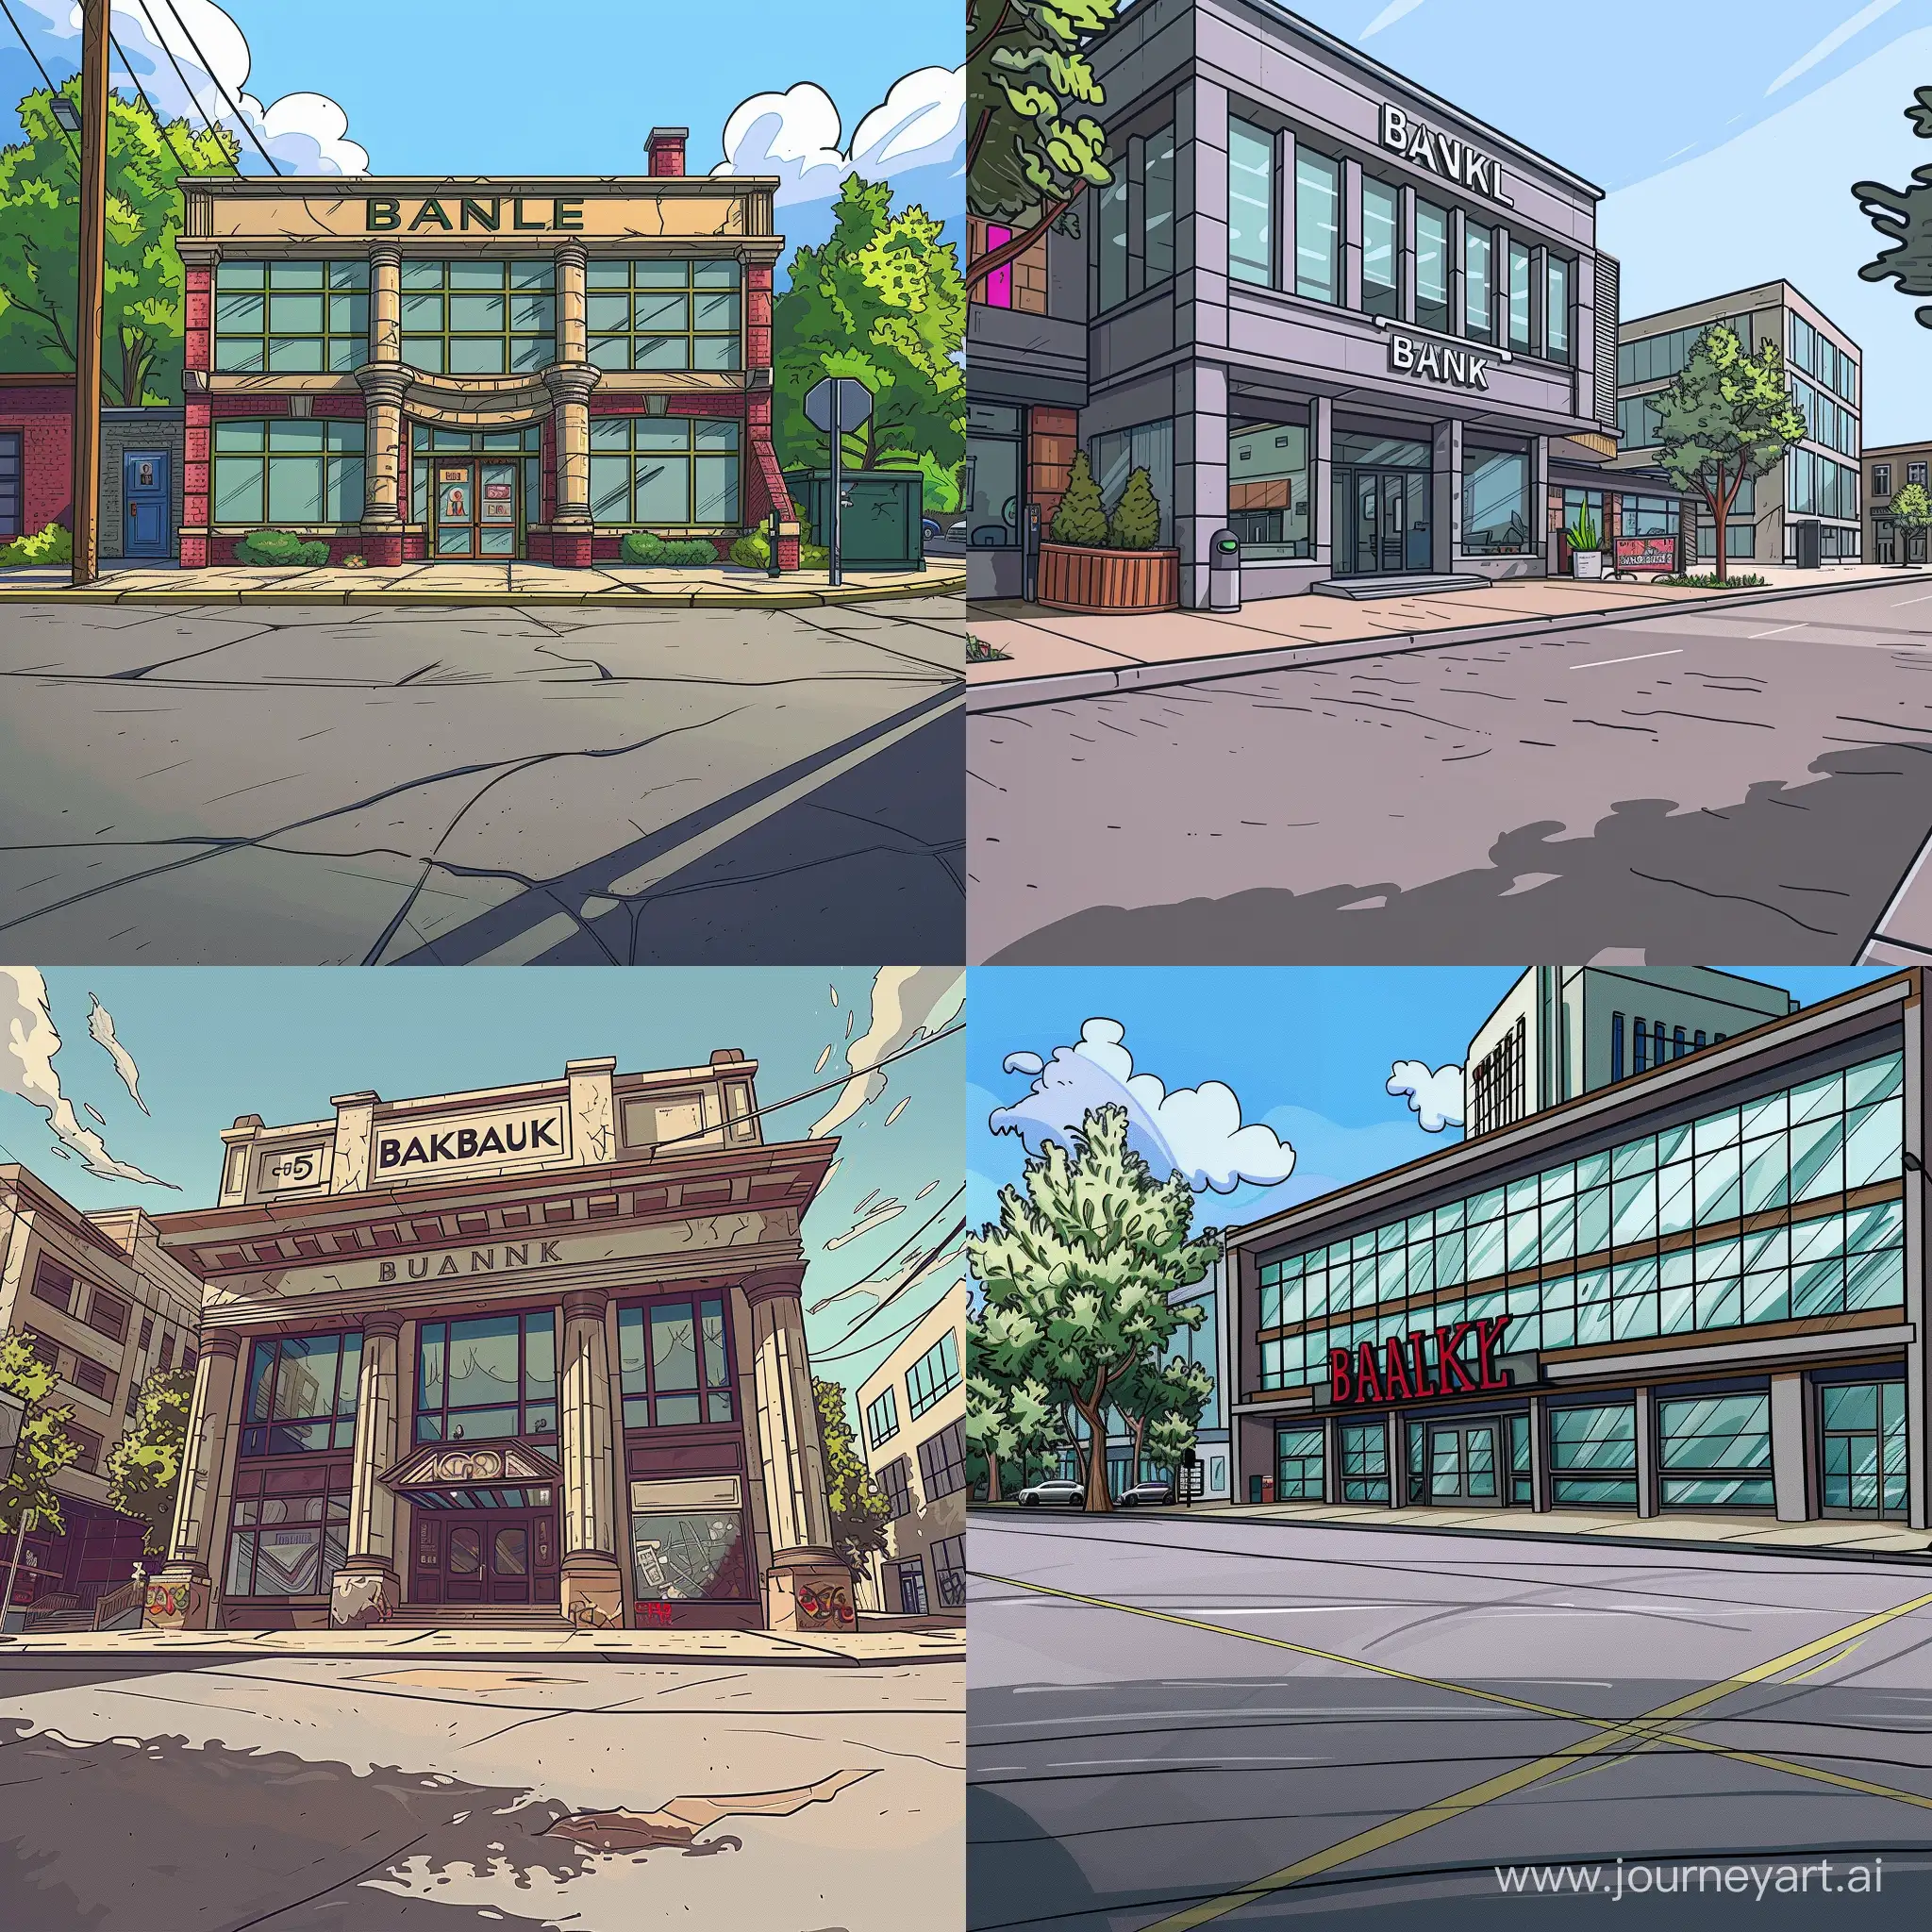 CartoonRealistic-Bank-Building-on-Street-GTA-5-Style-Art